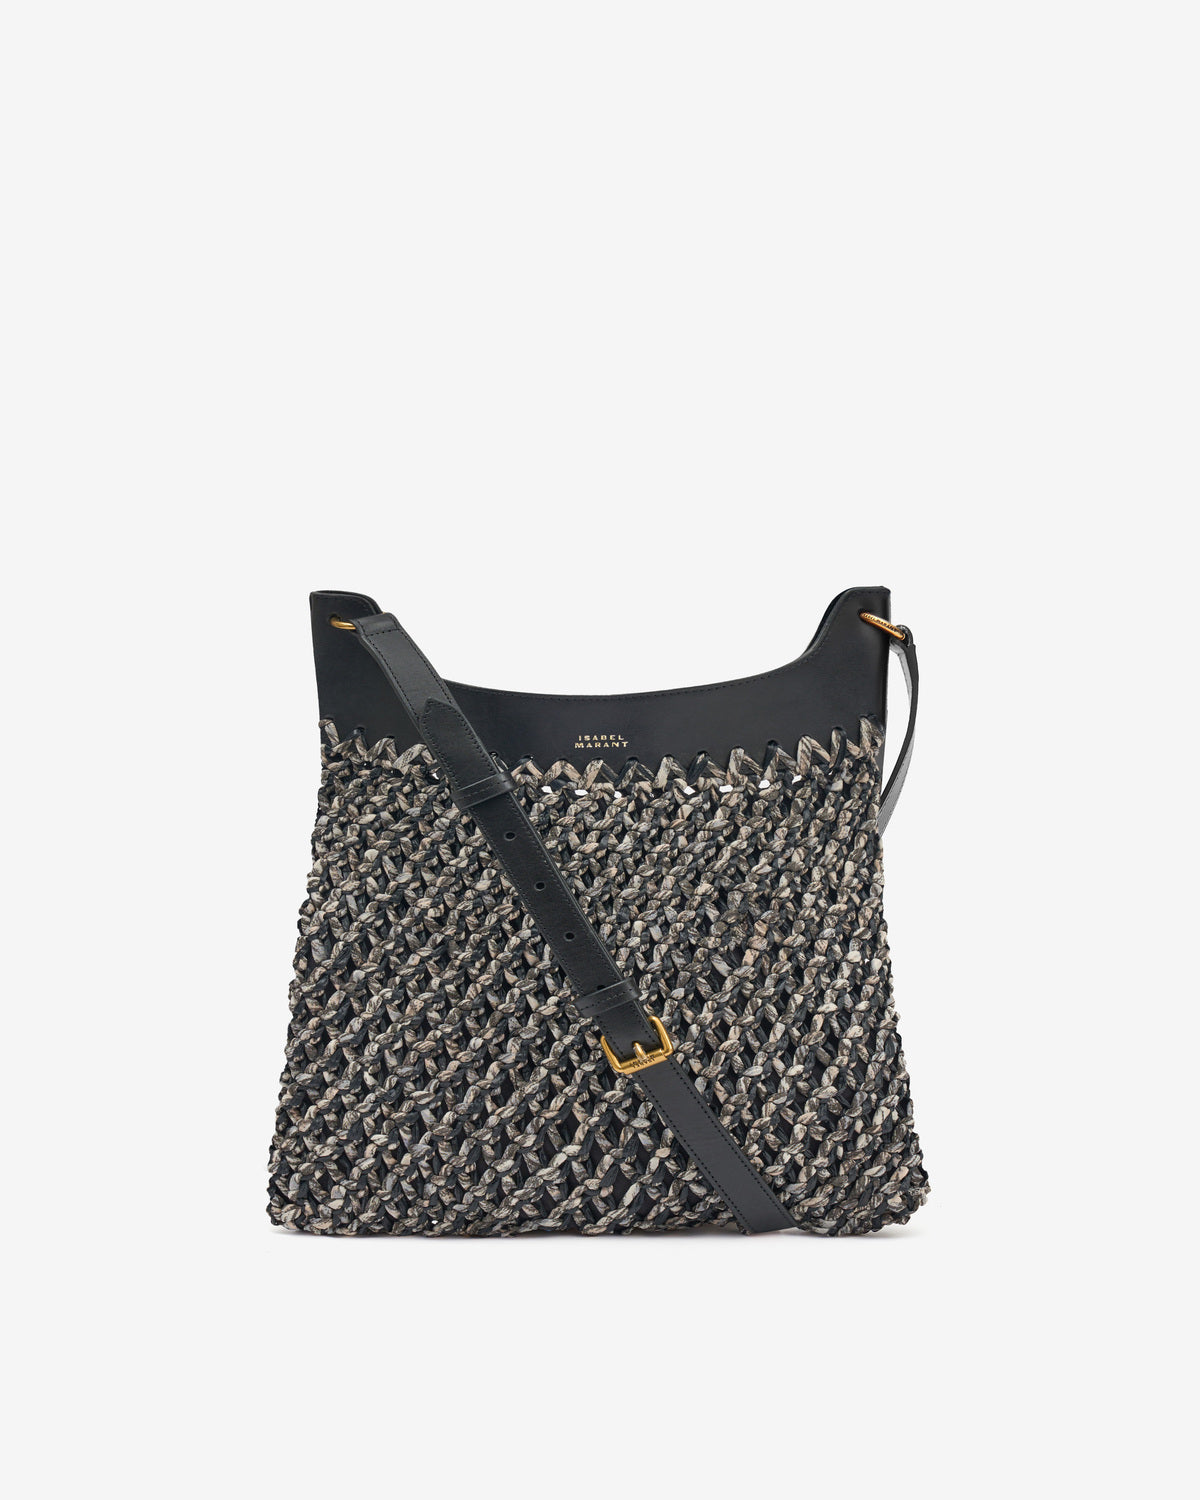 Shoulder Bags Woman | ISABEL MARANT Official Online Store